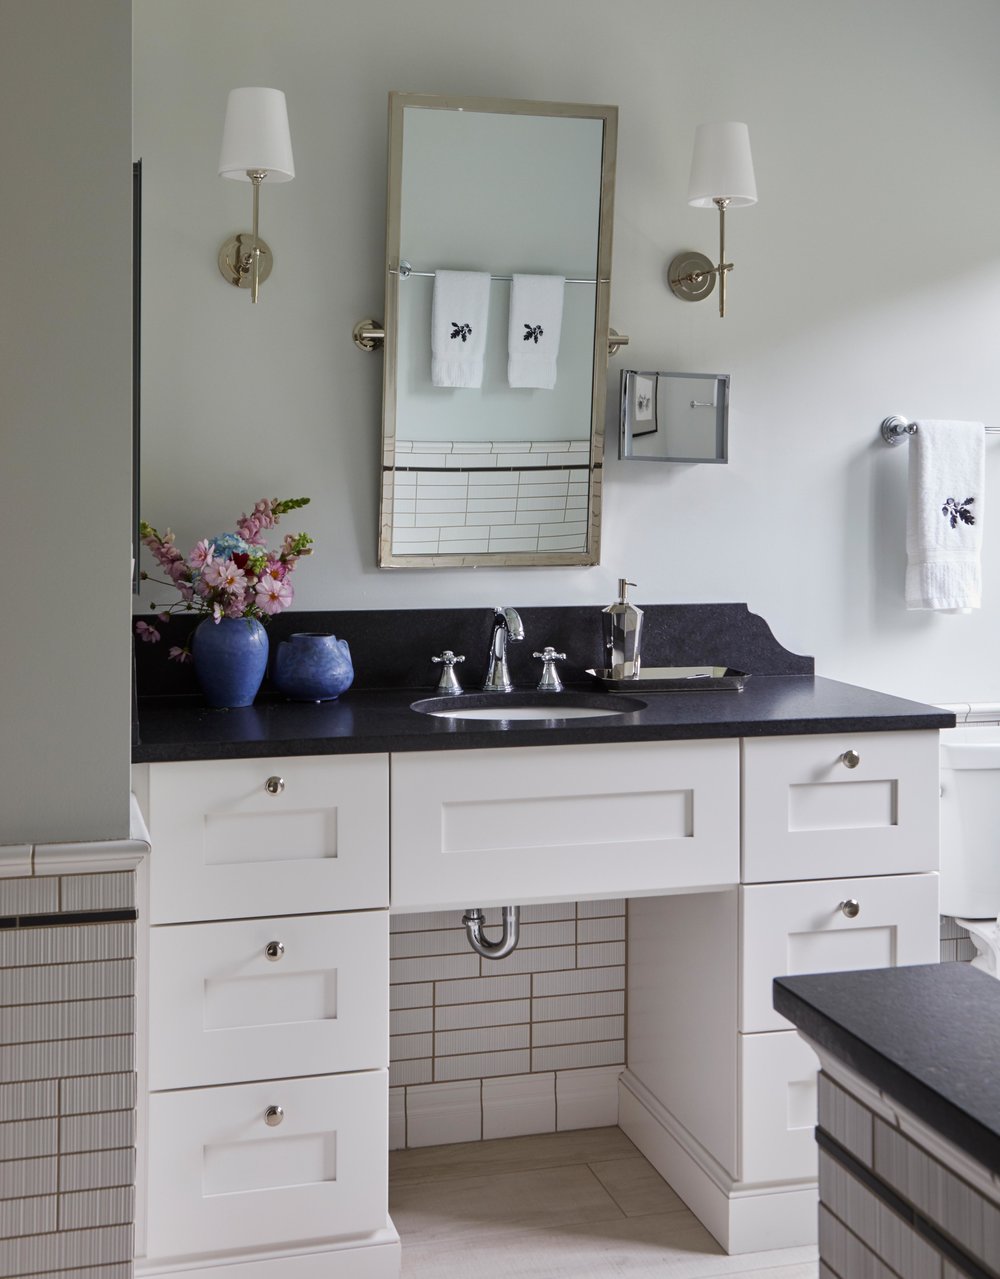 Classic and coastal white bathroom. Come see more interior design inspiration from Elizabeth Drake. Photo by Werner Straube. #interiordesign #classicdesign #traditionaldecor #housetour #elizabethdrake